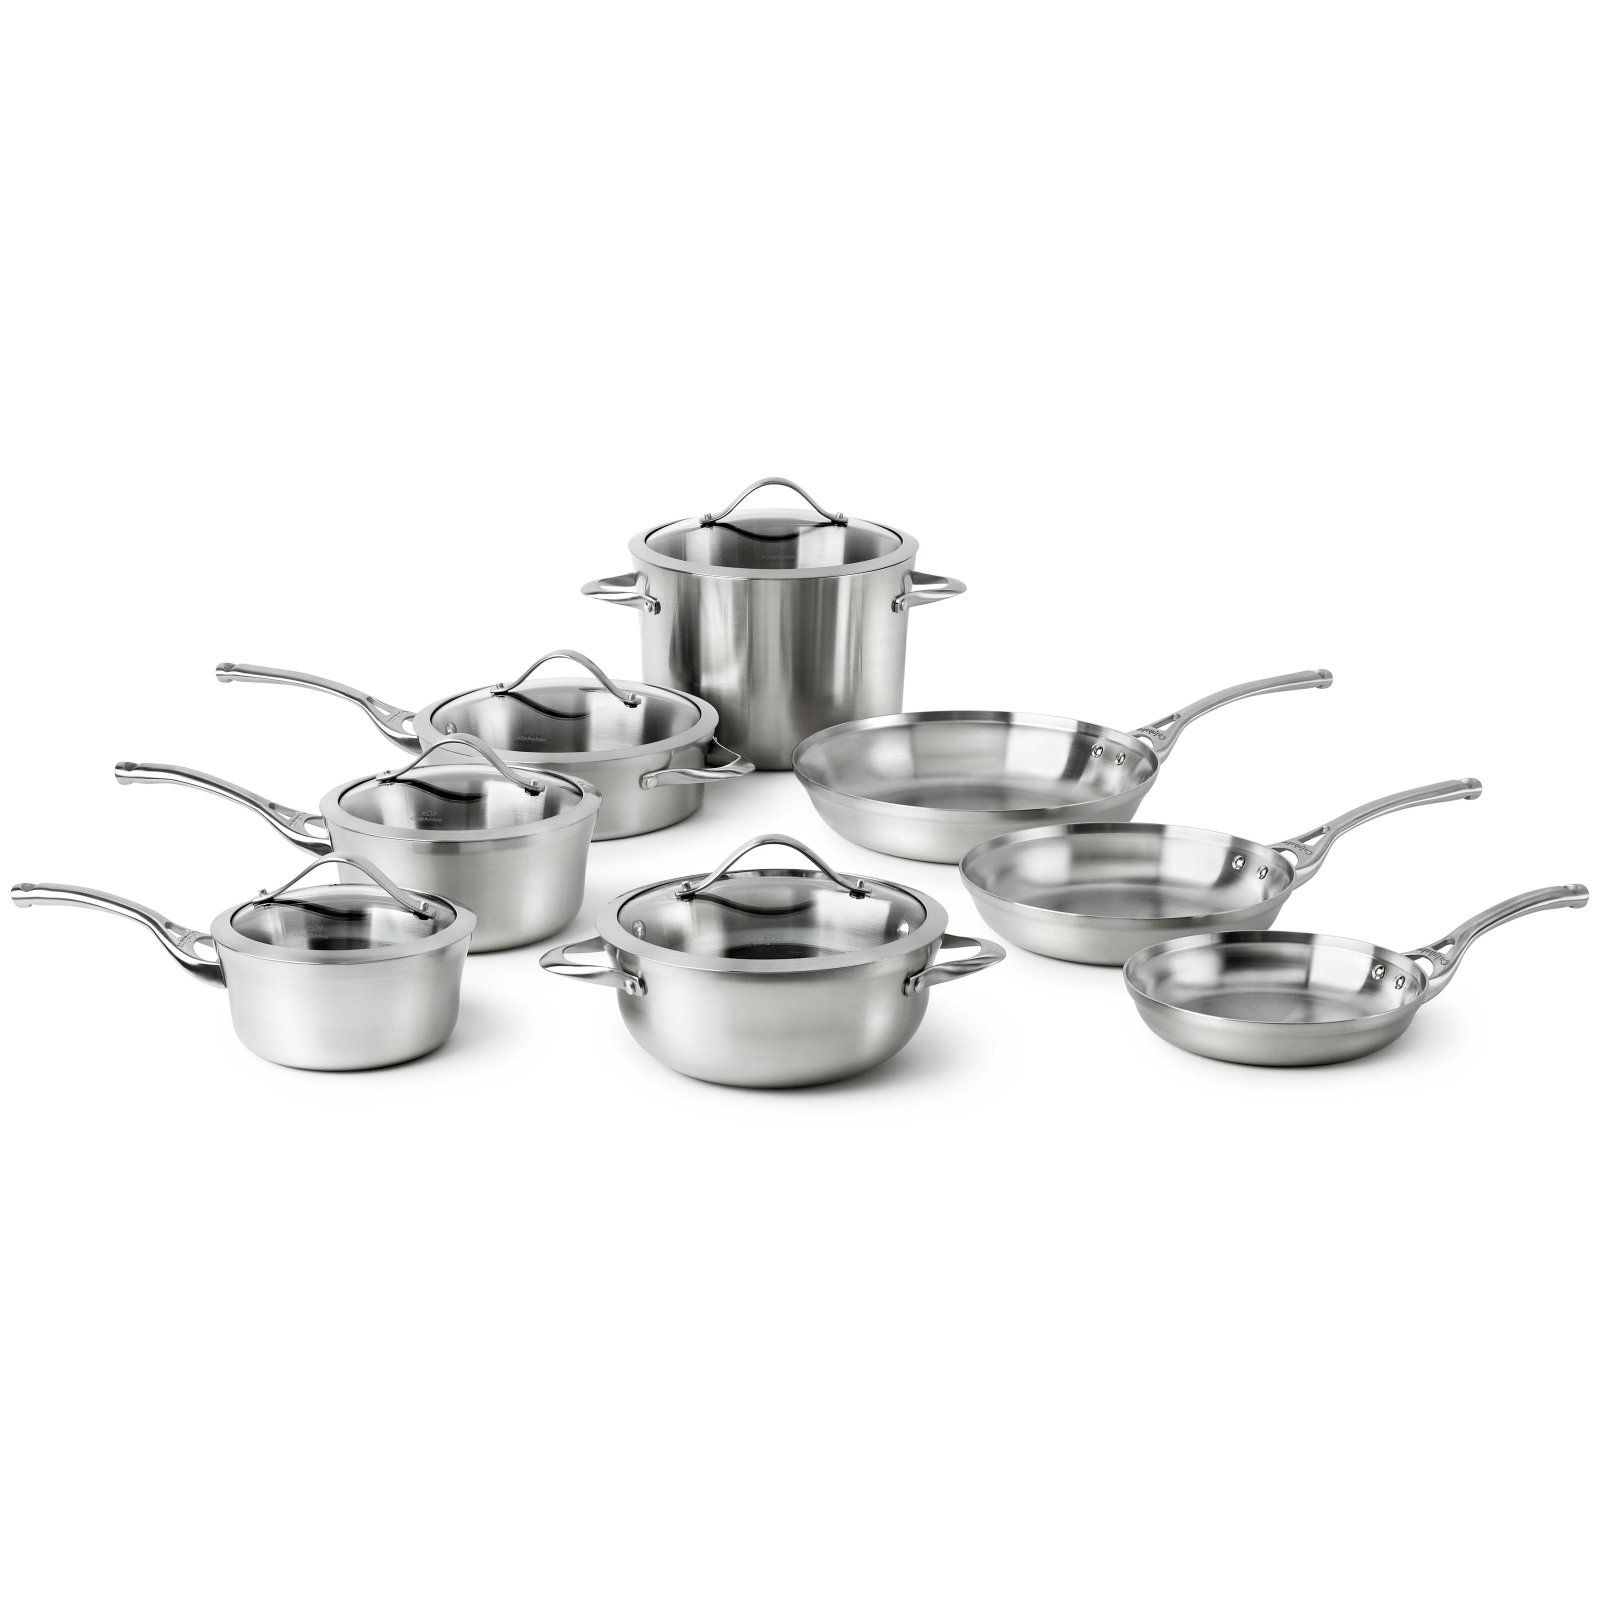 Calphalon Contemporary Stainless Steel 13 Piece Cookware Set | My ...